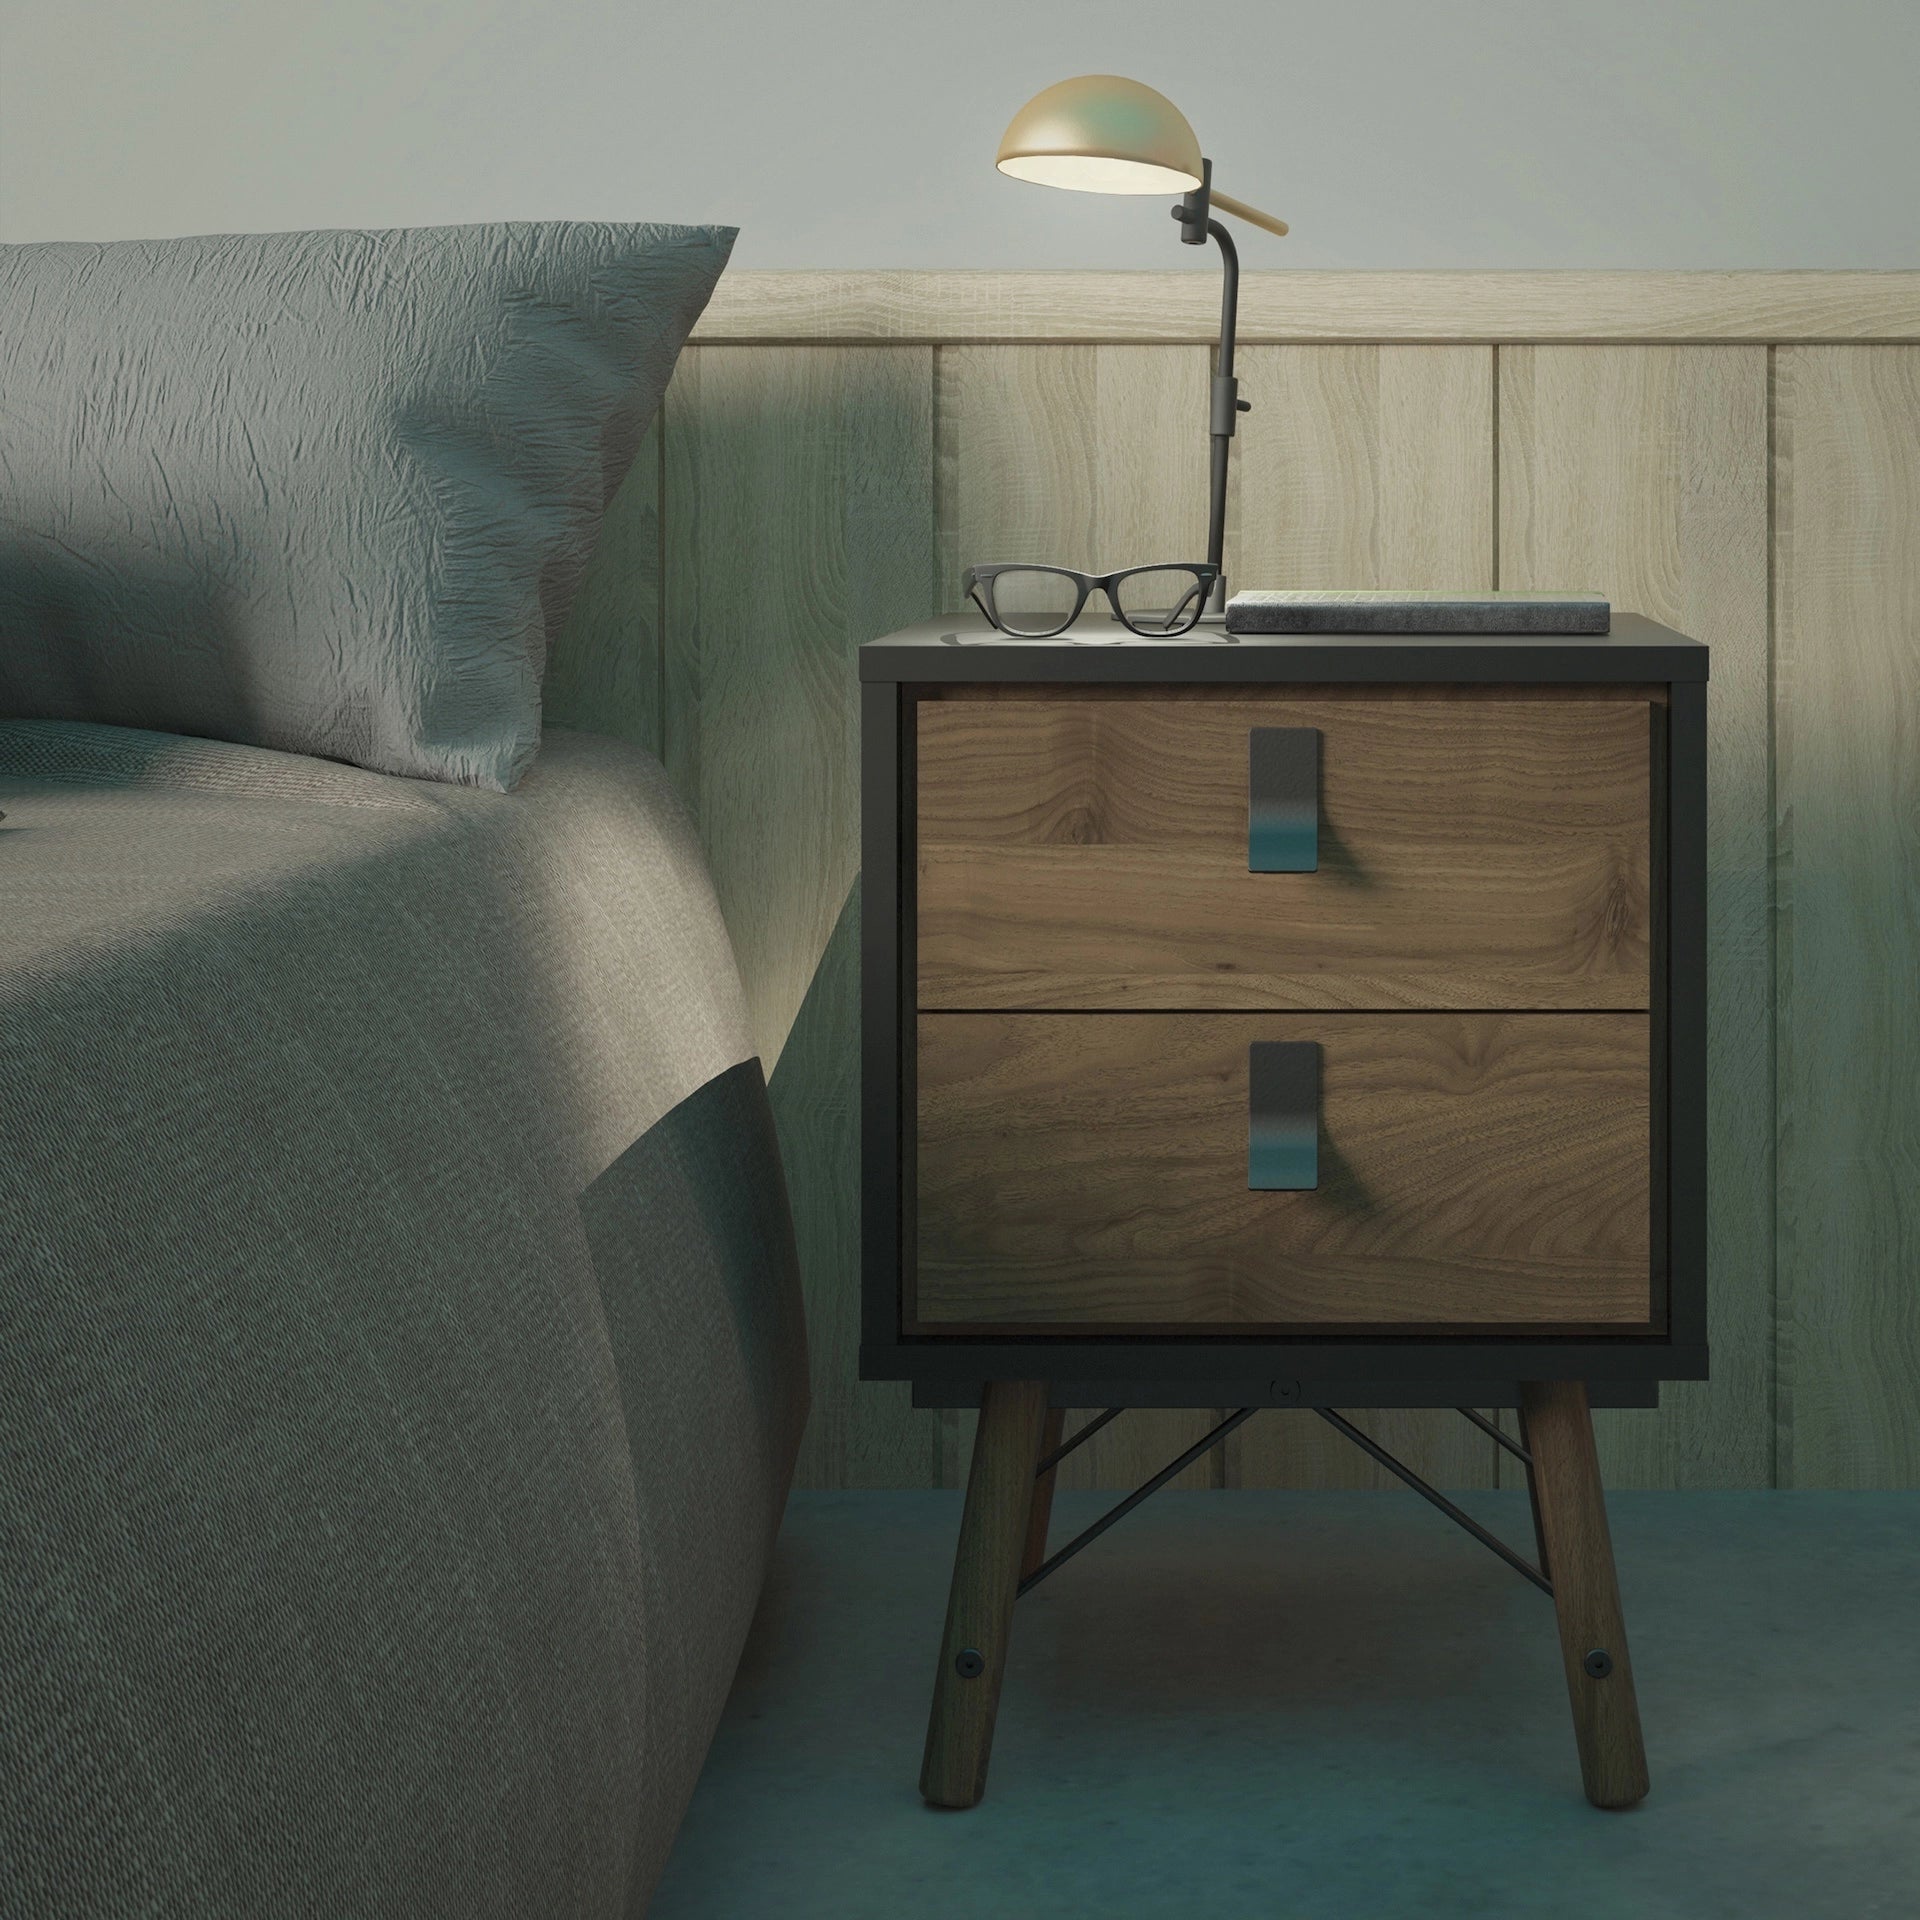 Furniture To Go Ry Bedside Cabinet 2 Drawer in Matt Black Walnut